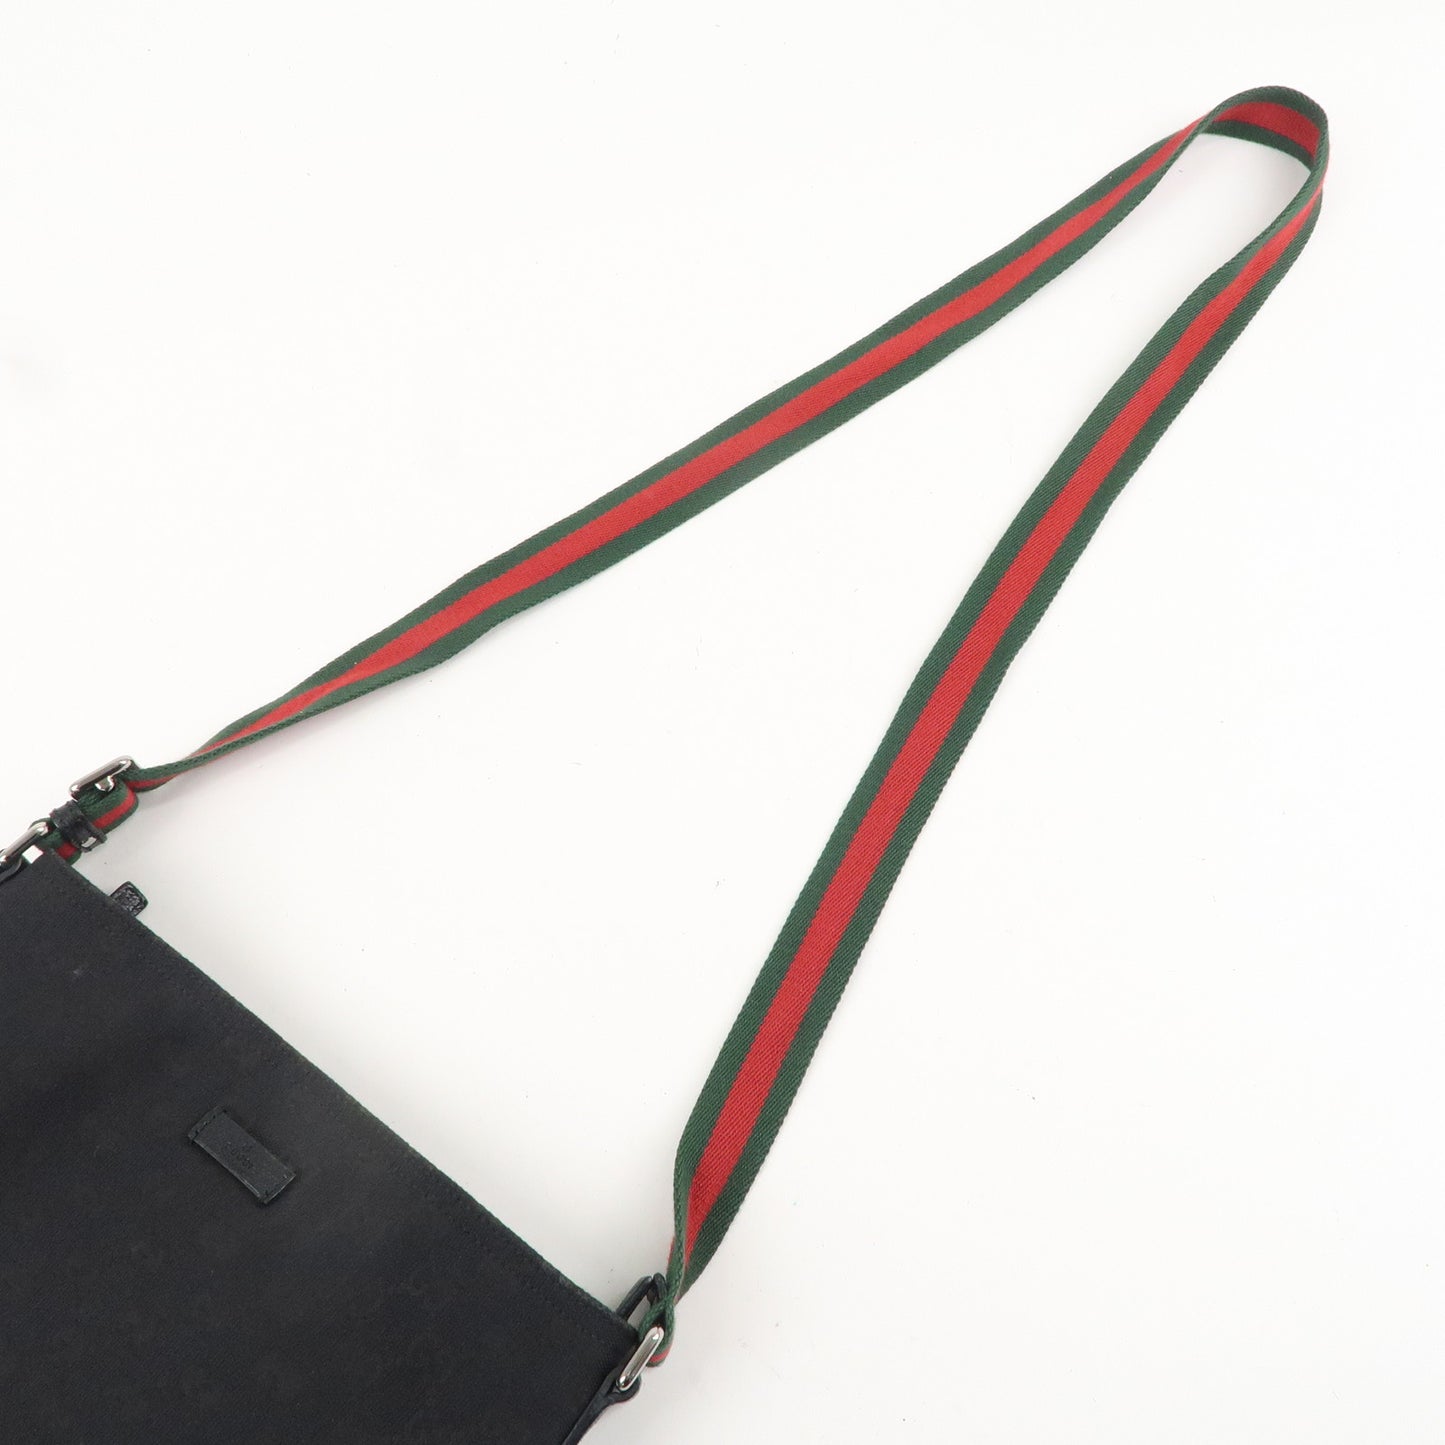 GUCCI Sherry GG Canvas Leather Shoulder Bag Black 189749